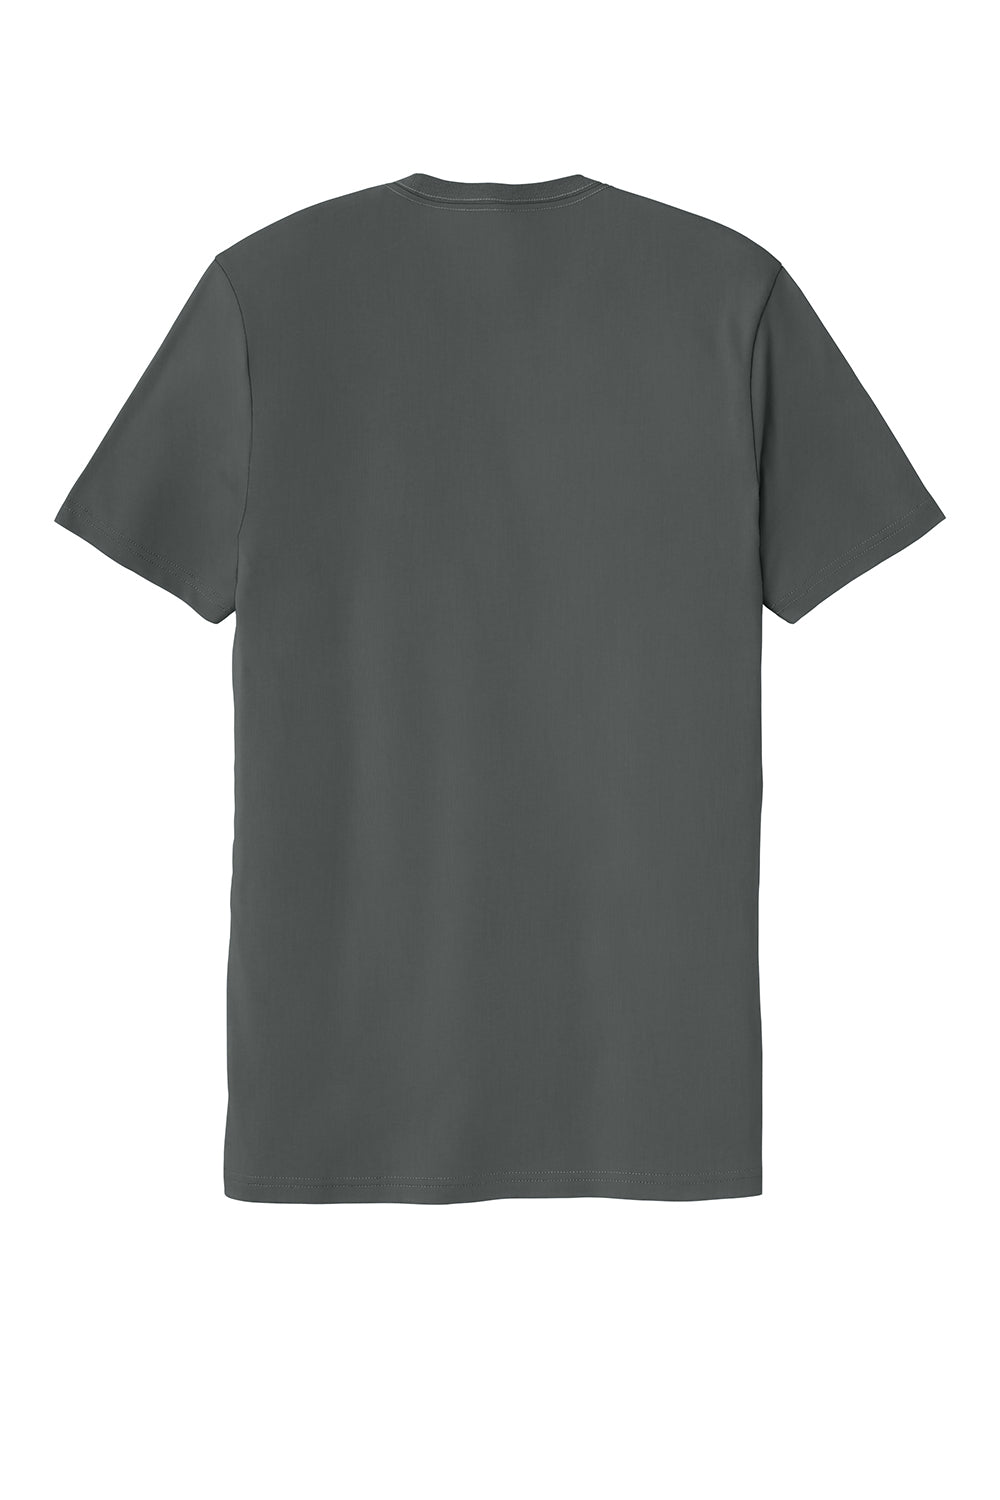 Allmade AL2100 Mens Organic Short Sleeve Crewneck T-Shirt Terrain Grey Flat Back